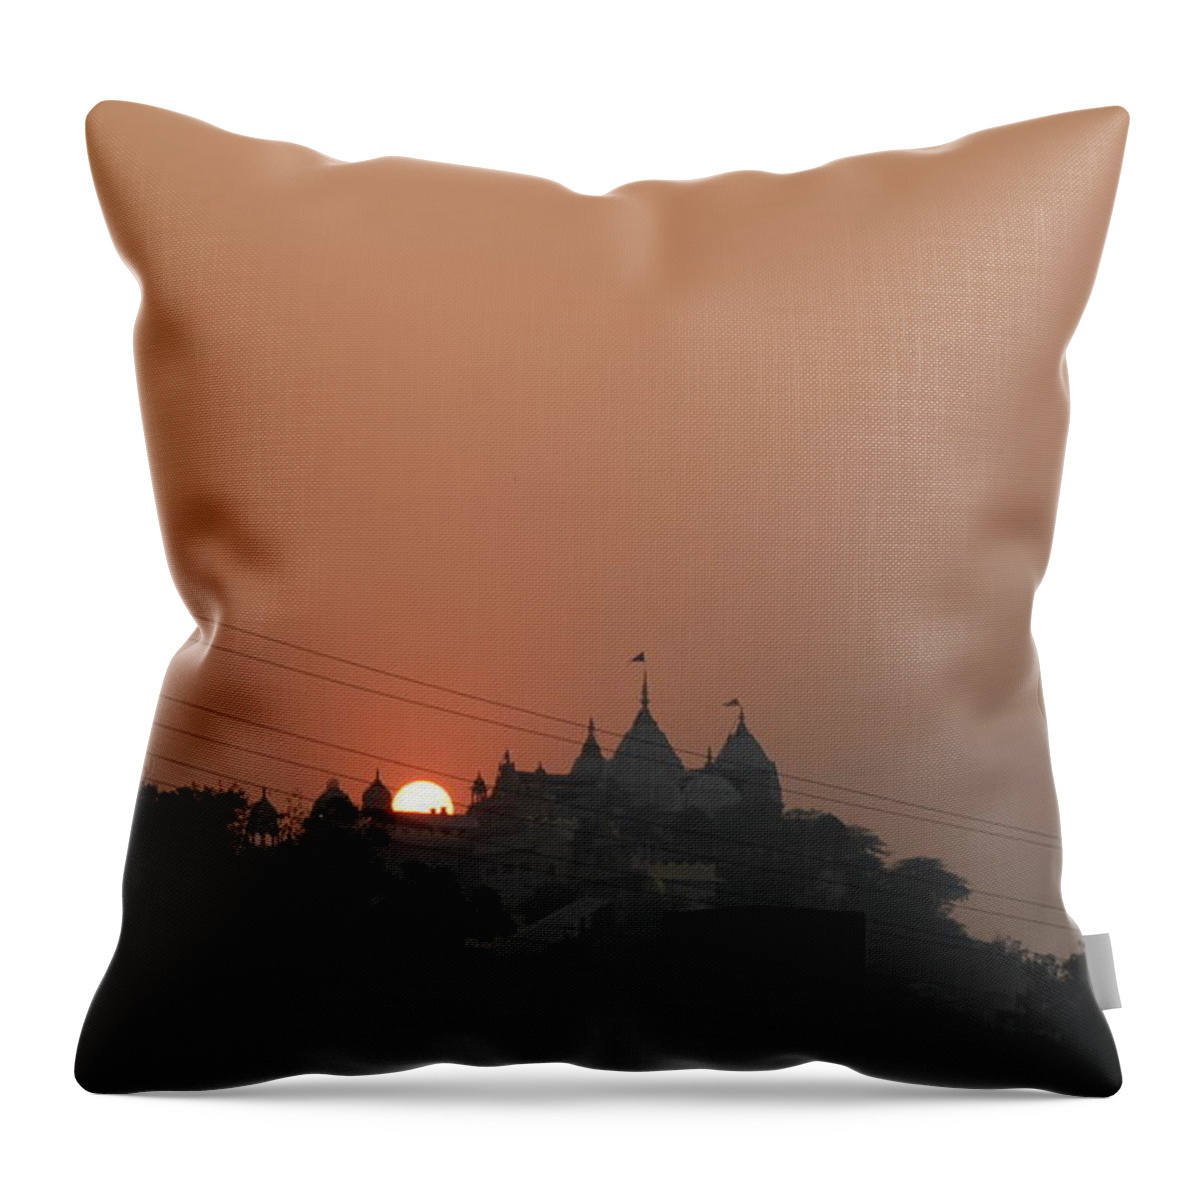 Barsana Throw Pillow featuring the photograph Sunset, Barsana by Jennifer Mazzucco